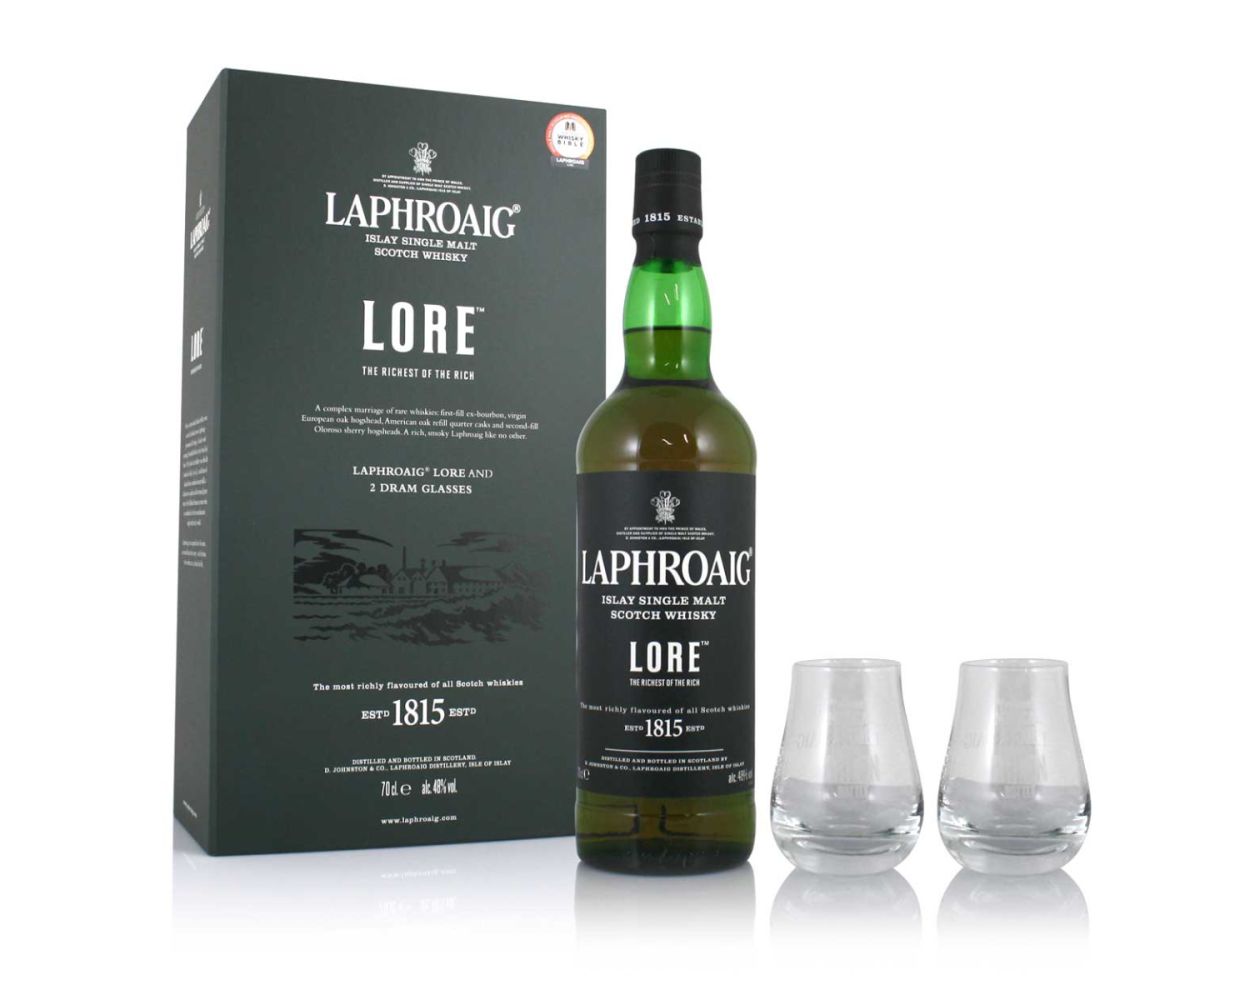 Laphroaig Lore Gift Pack